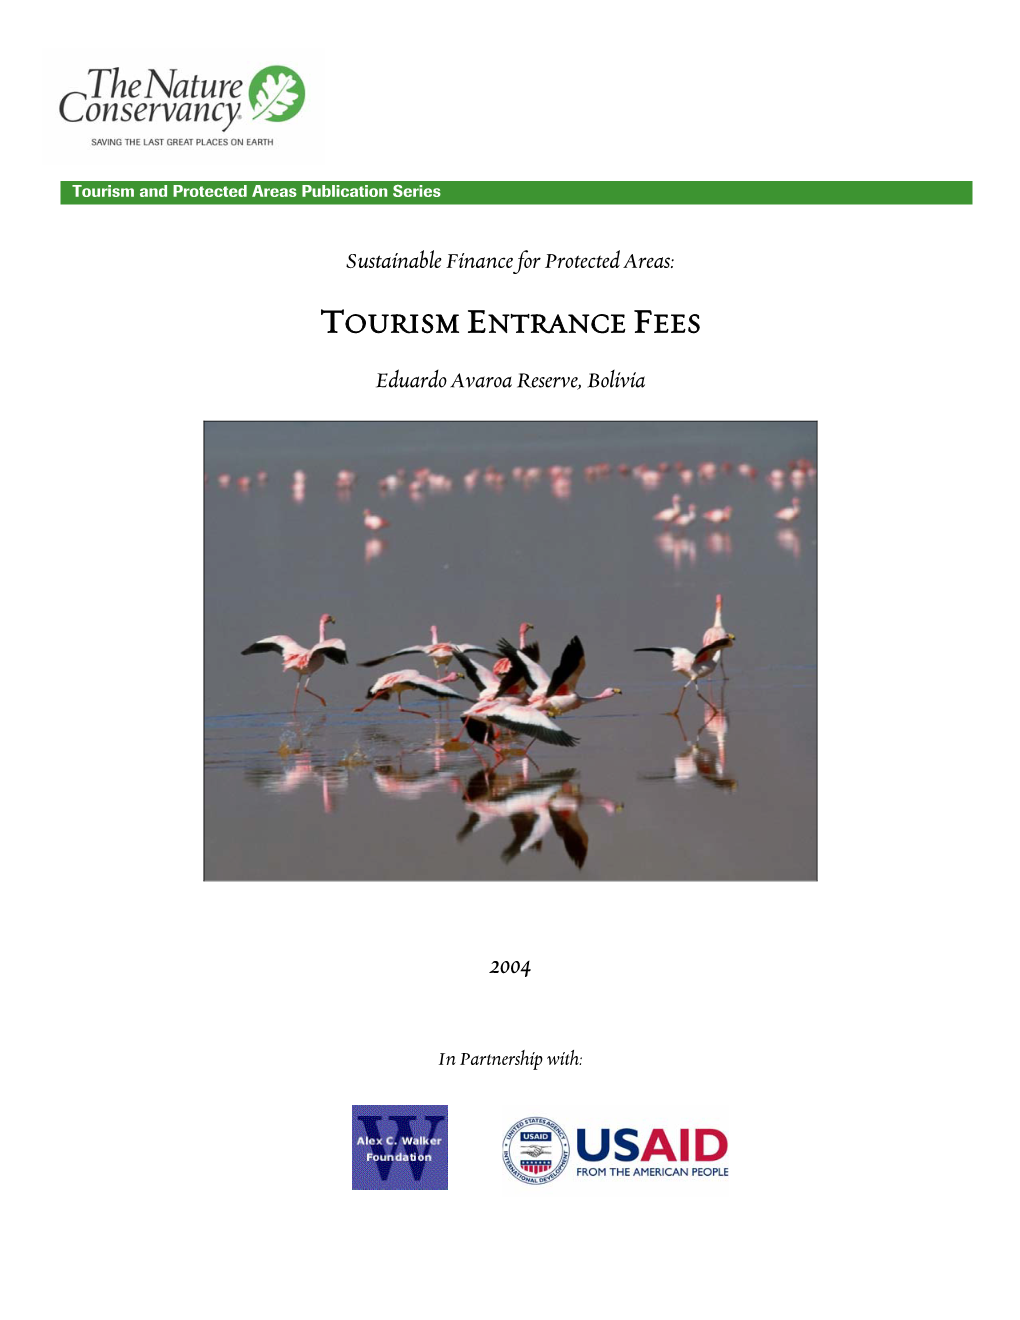 Tourism Entrance Fees 2004